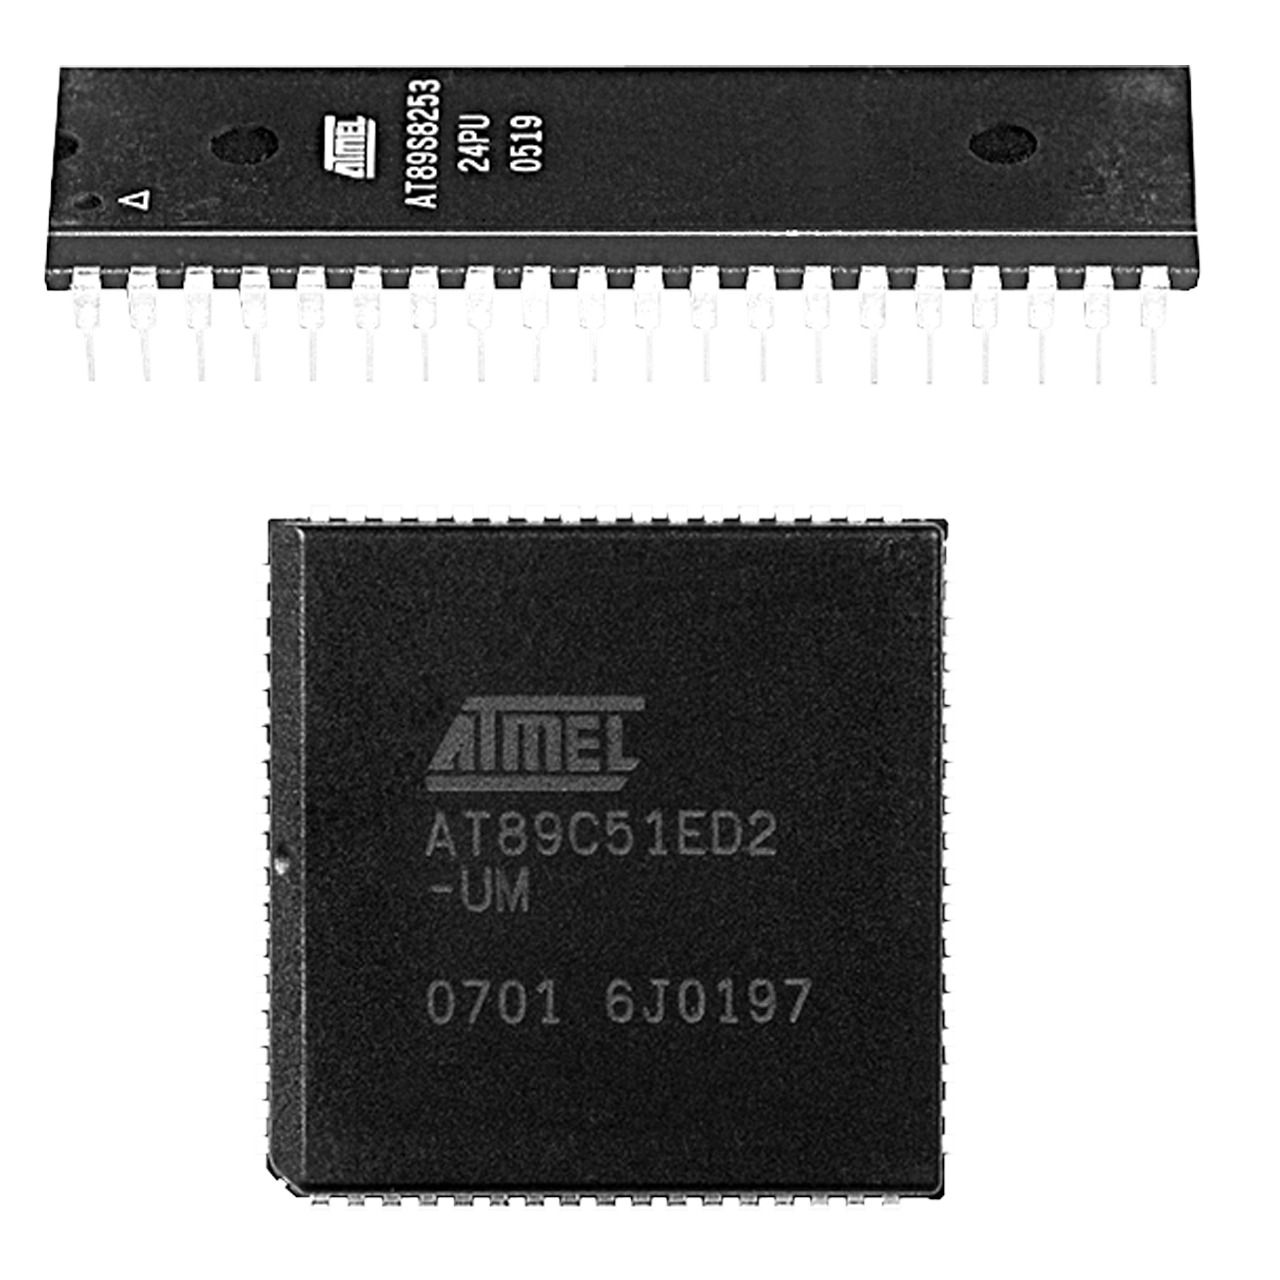 Atmel Mikrocontroller AT89C51RD2-SLSUM- VQFP44 unter Komponenten